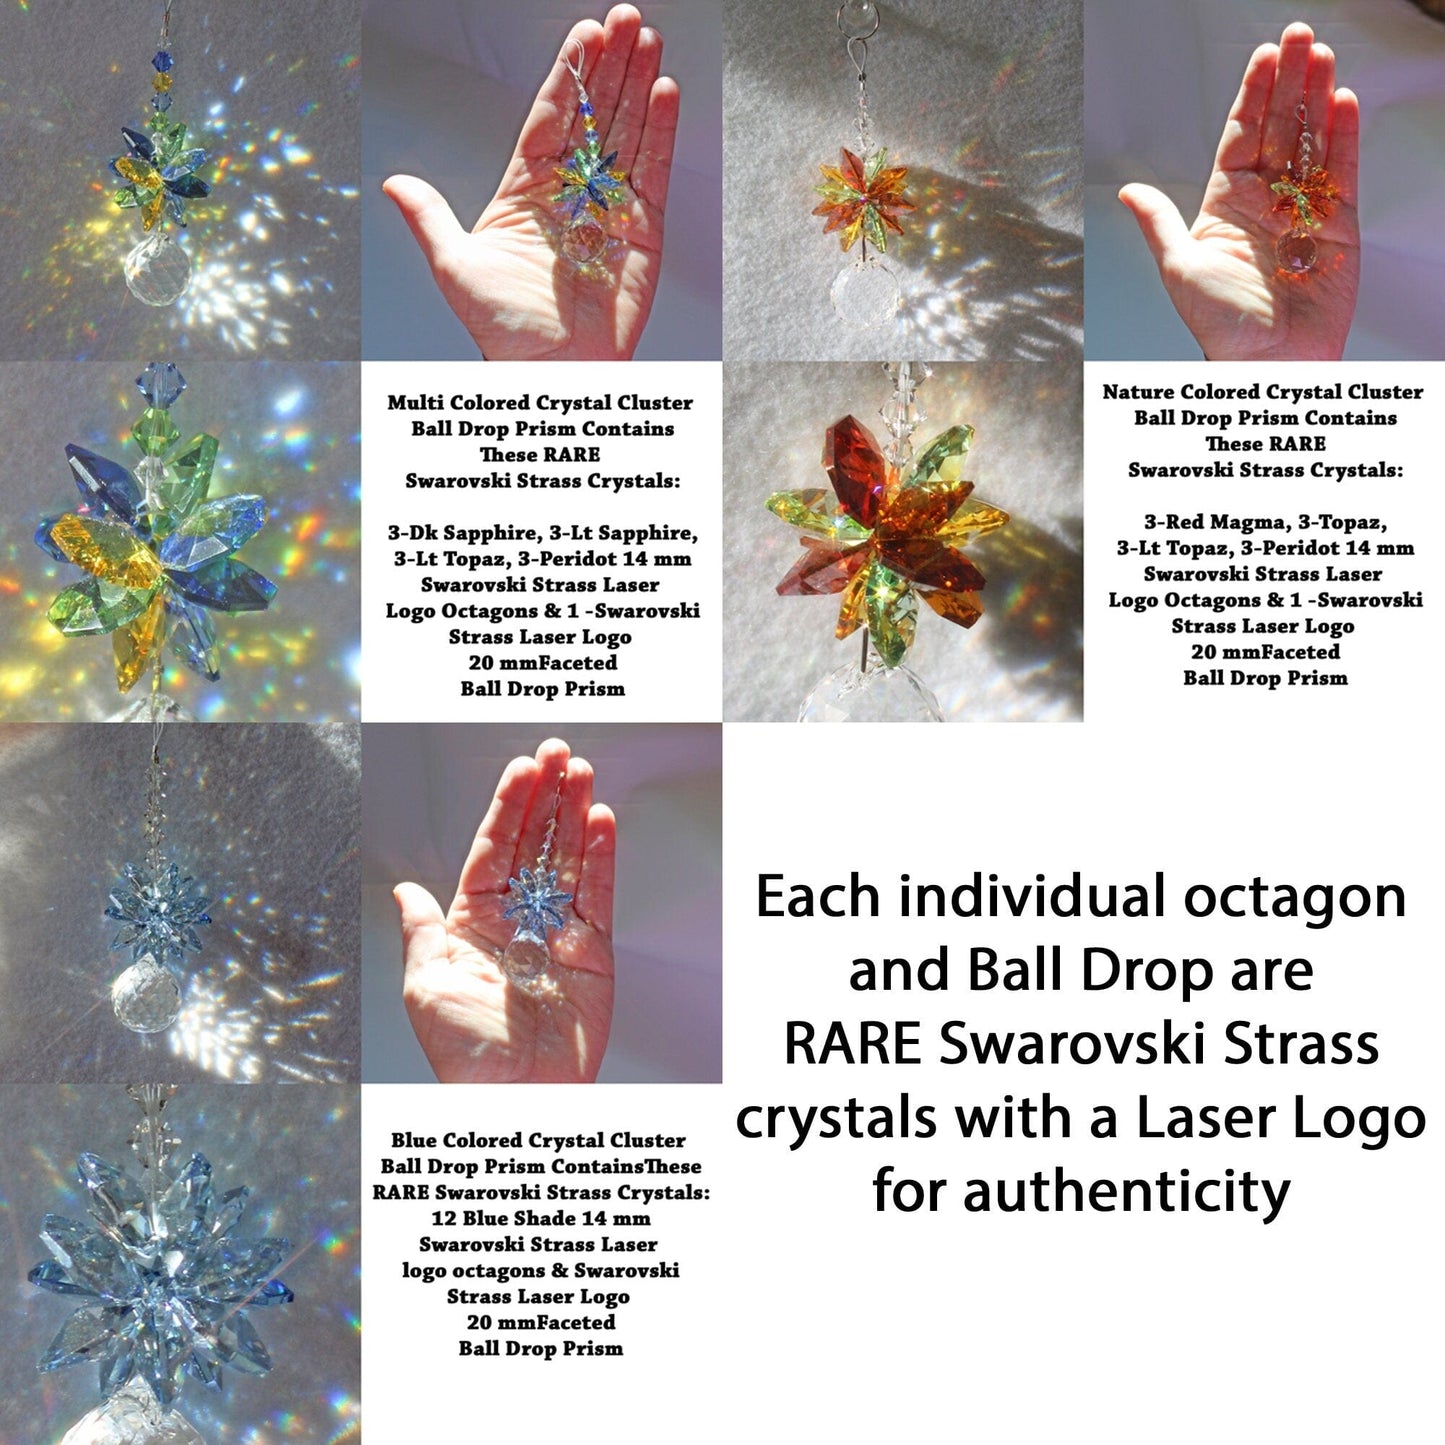 Monarch Butterfly Suncatcher, Crystal Sun Catcher Mobile, Light Catcher, Window Hanging Prism, Rainbow Maker, Butterfly Ornament D